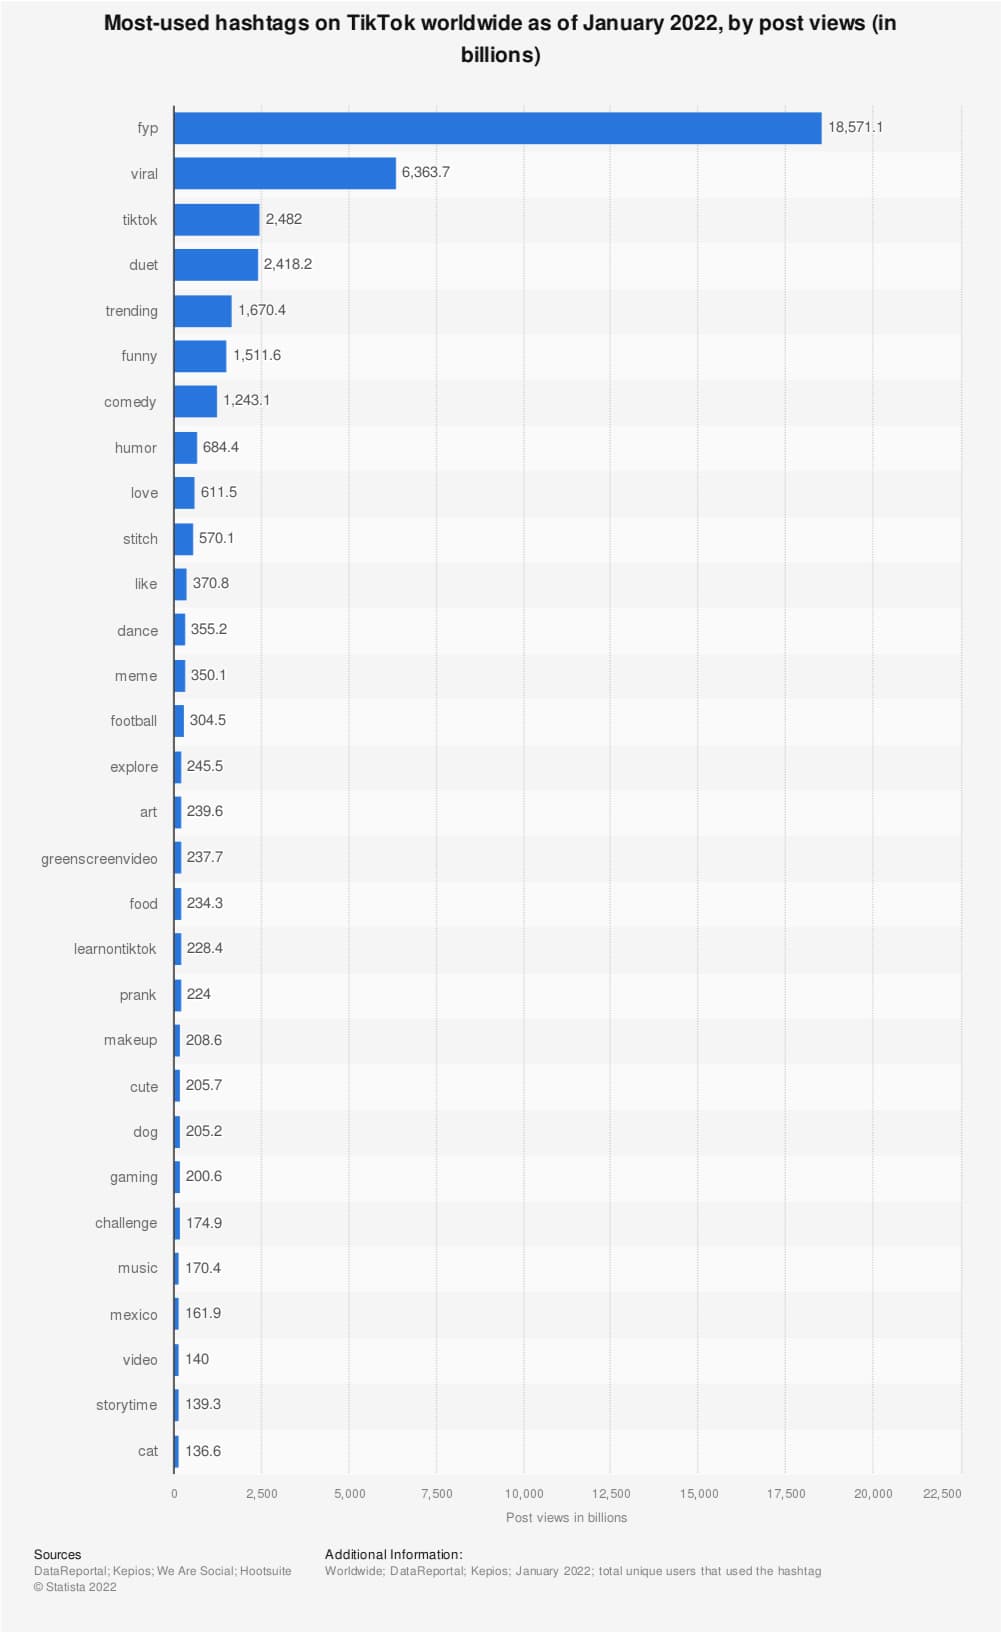 Most-used TikTok hashtags worldwide